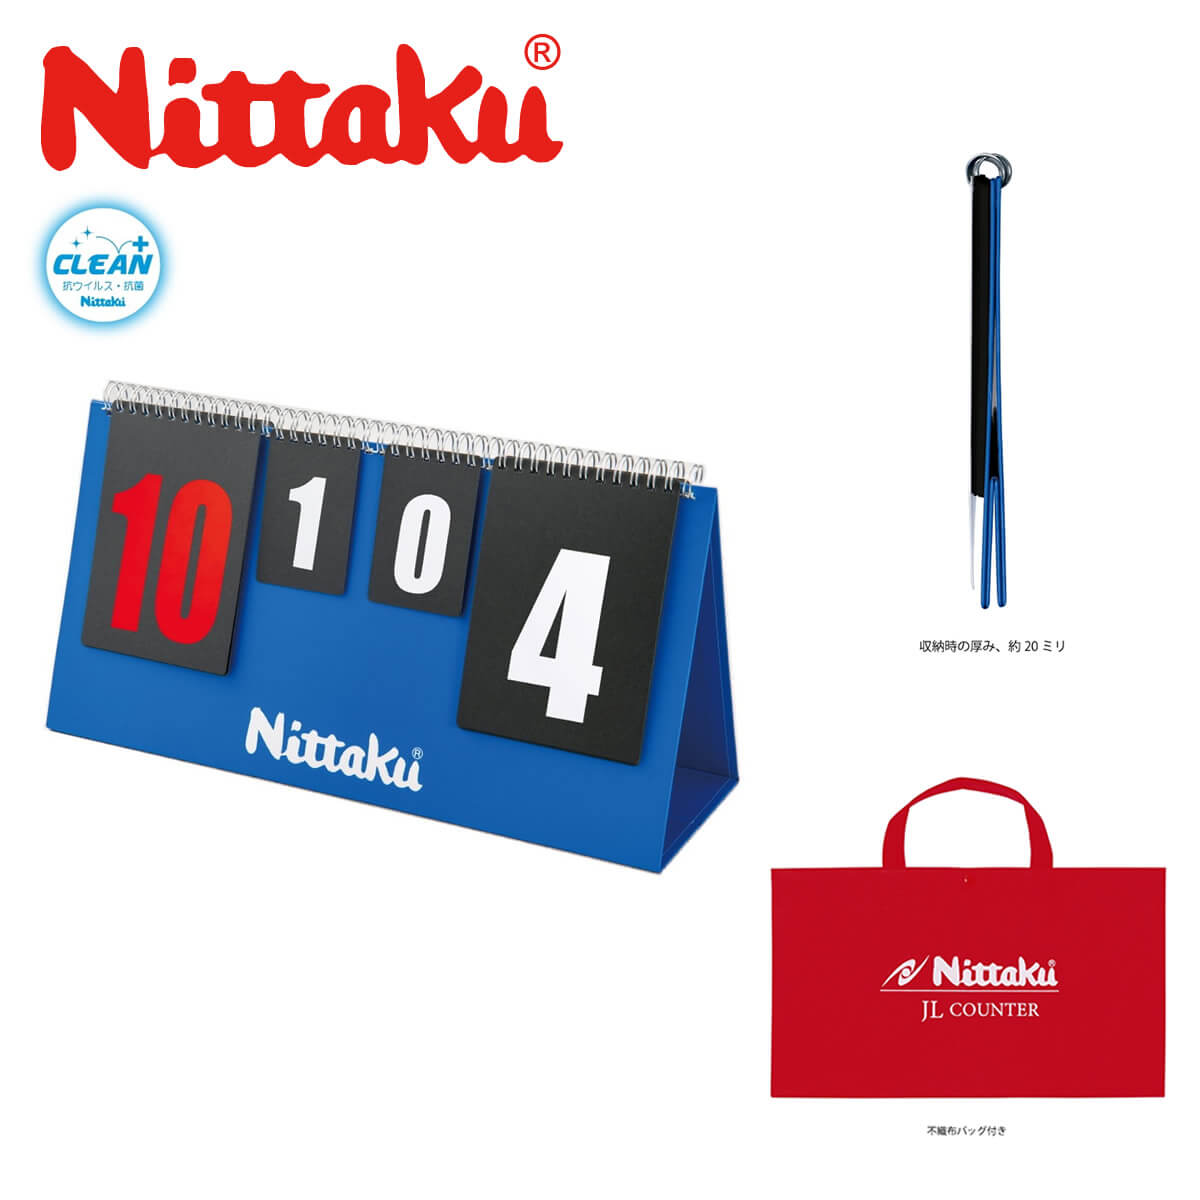 Nittaku NT-3736 JLカウンター クリーン 卓球 卓球台/ 卓球台周り ニッタク 2021春夏【取り寄せ】